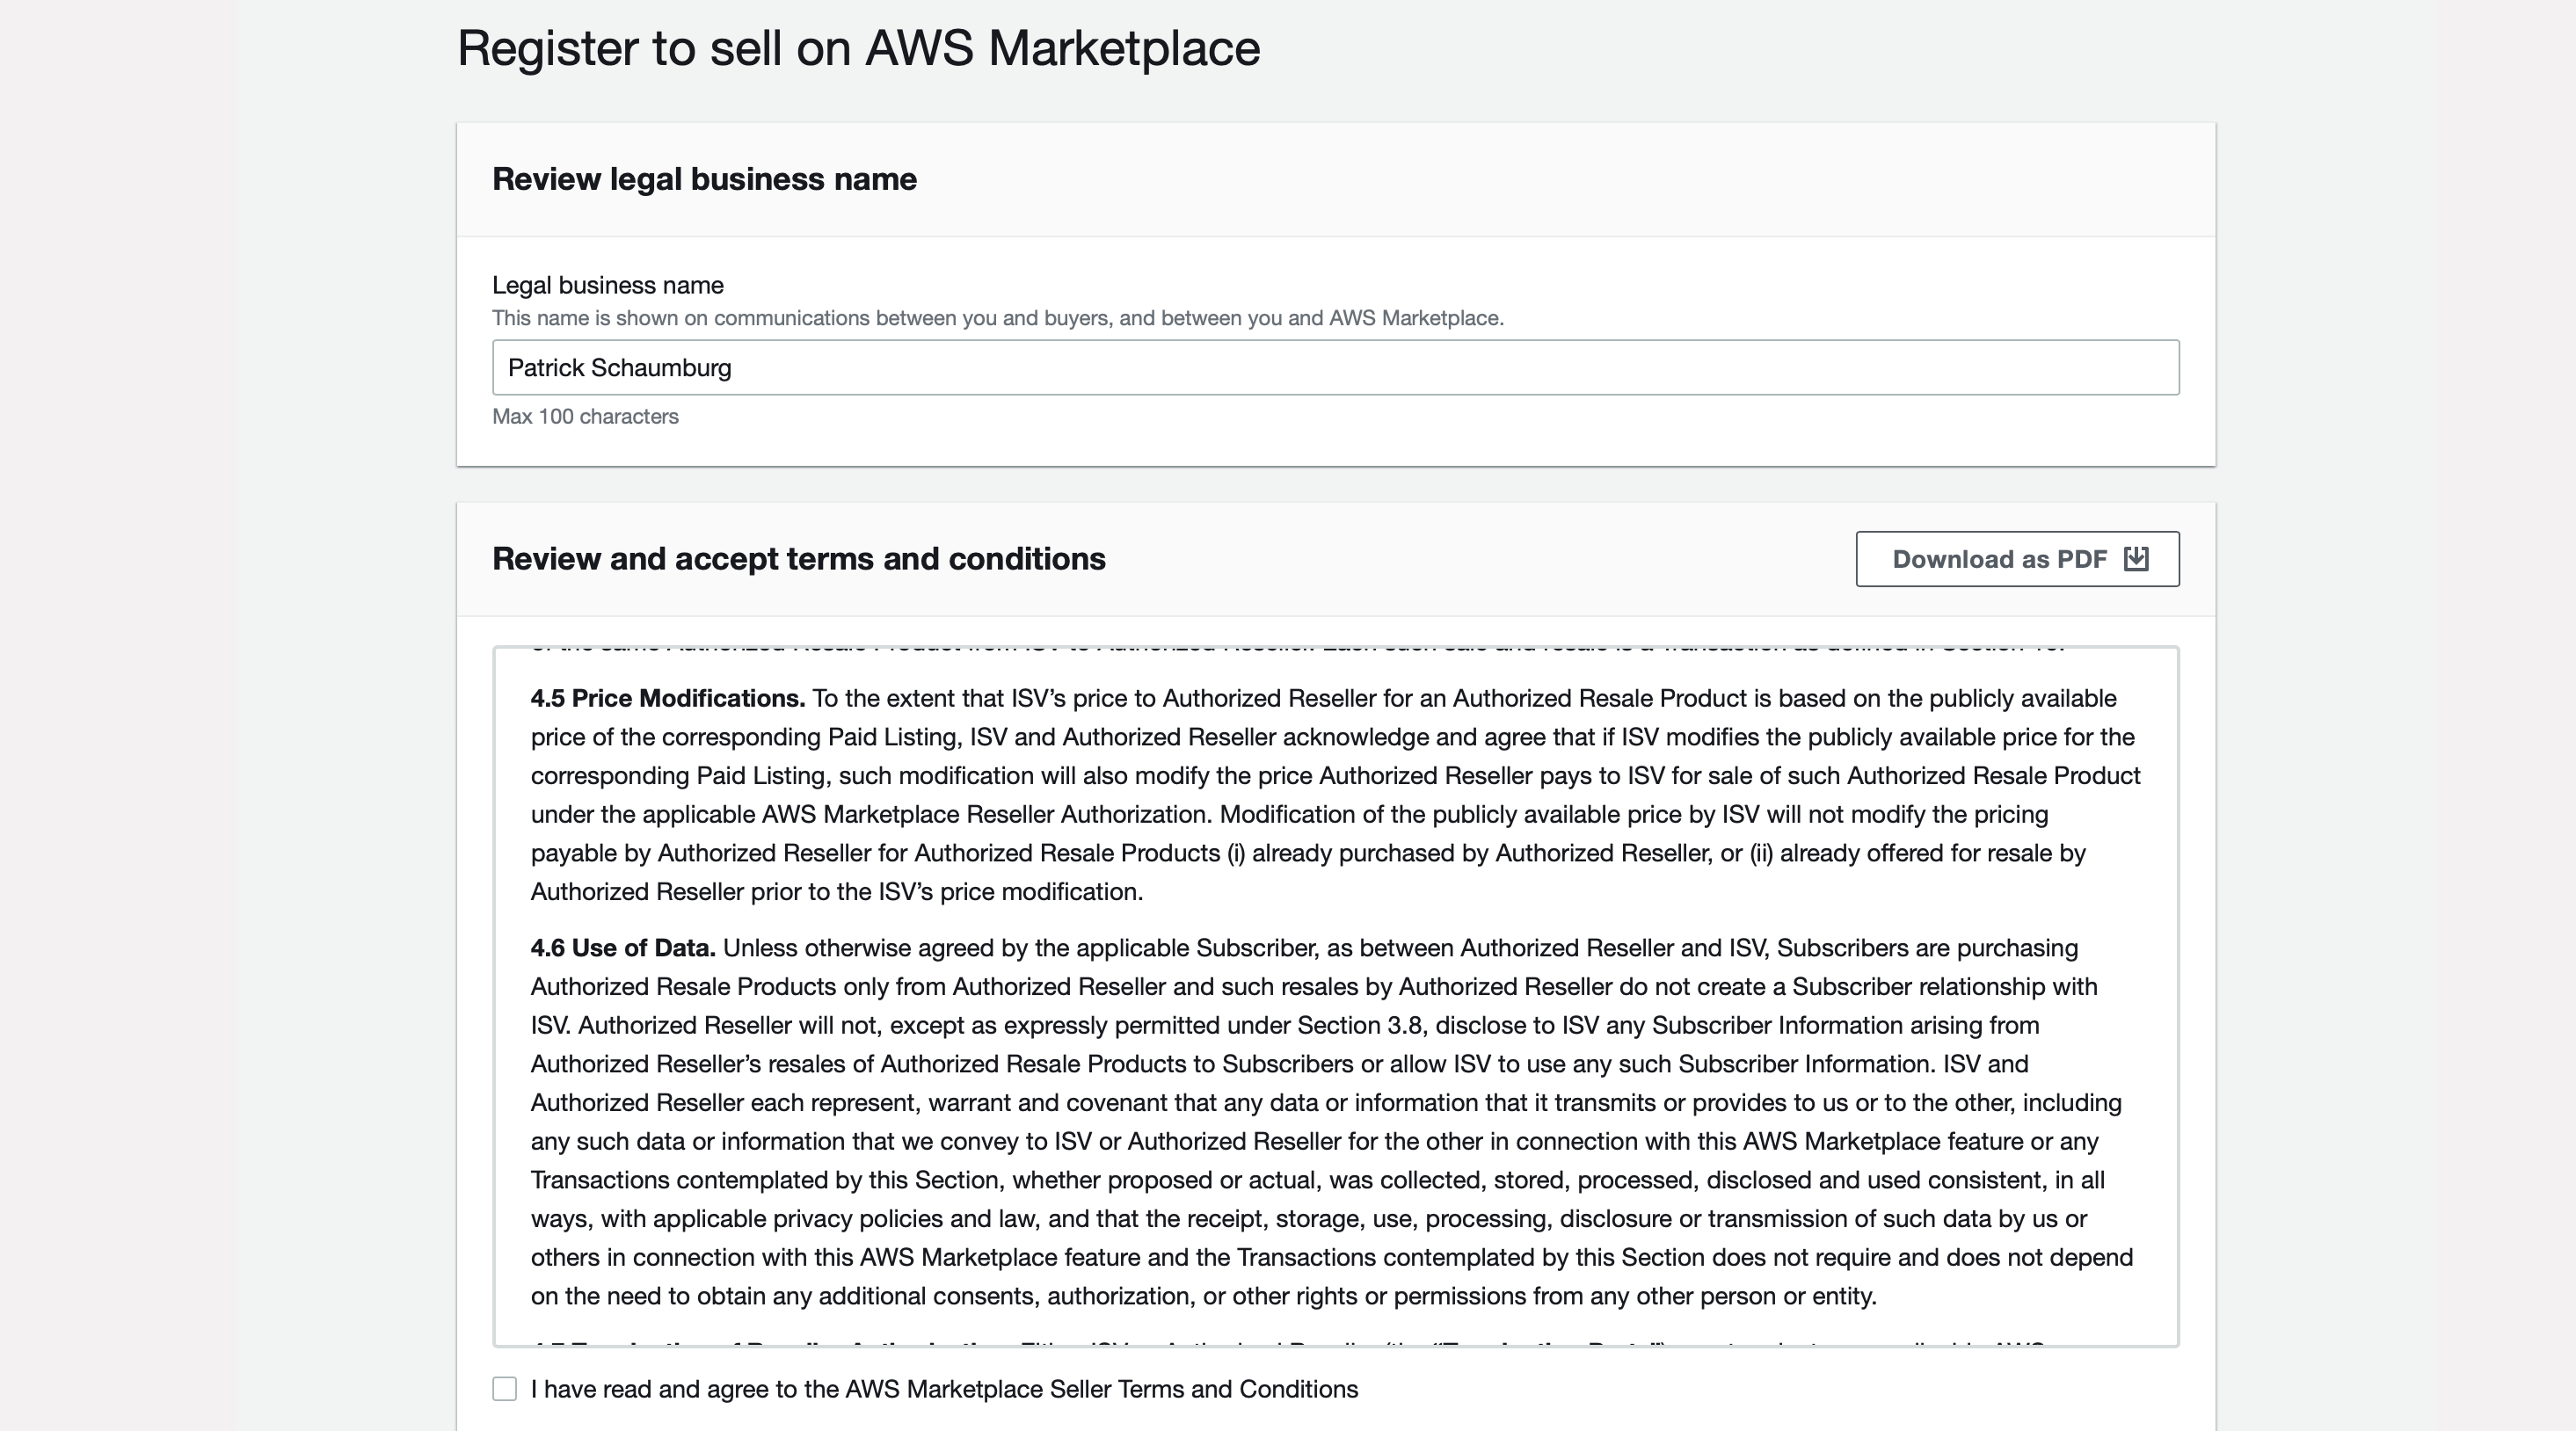 AWS Marketplace registration